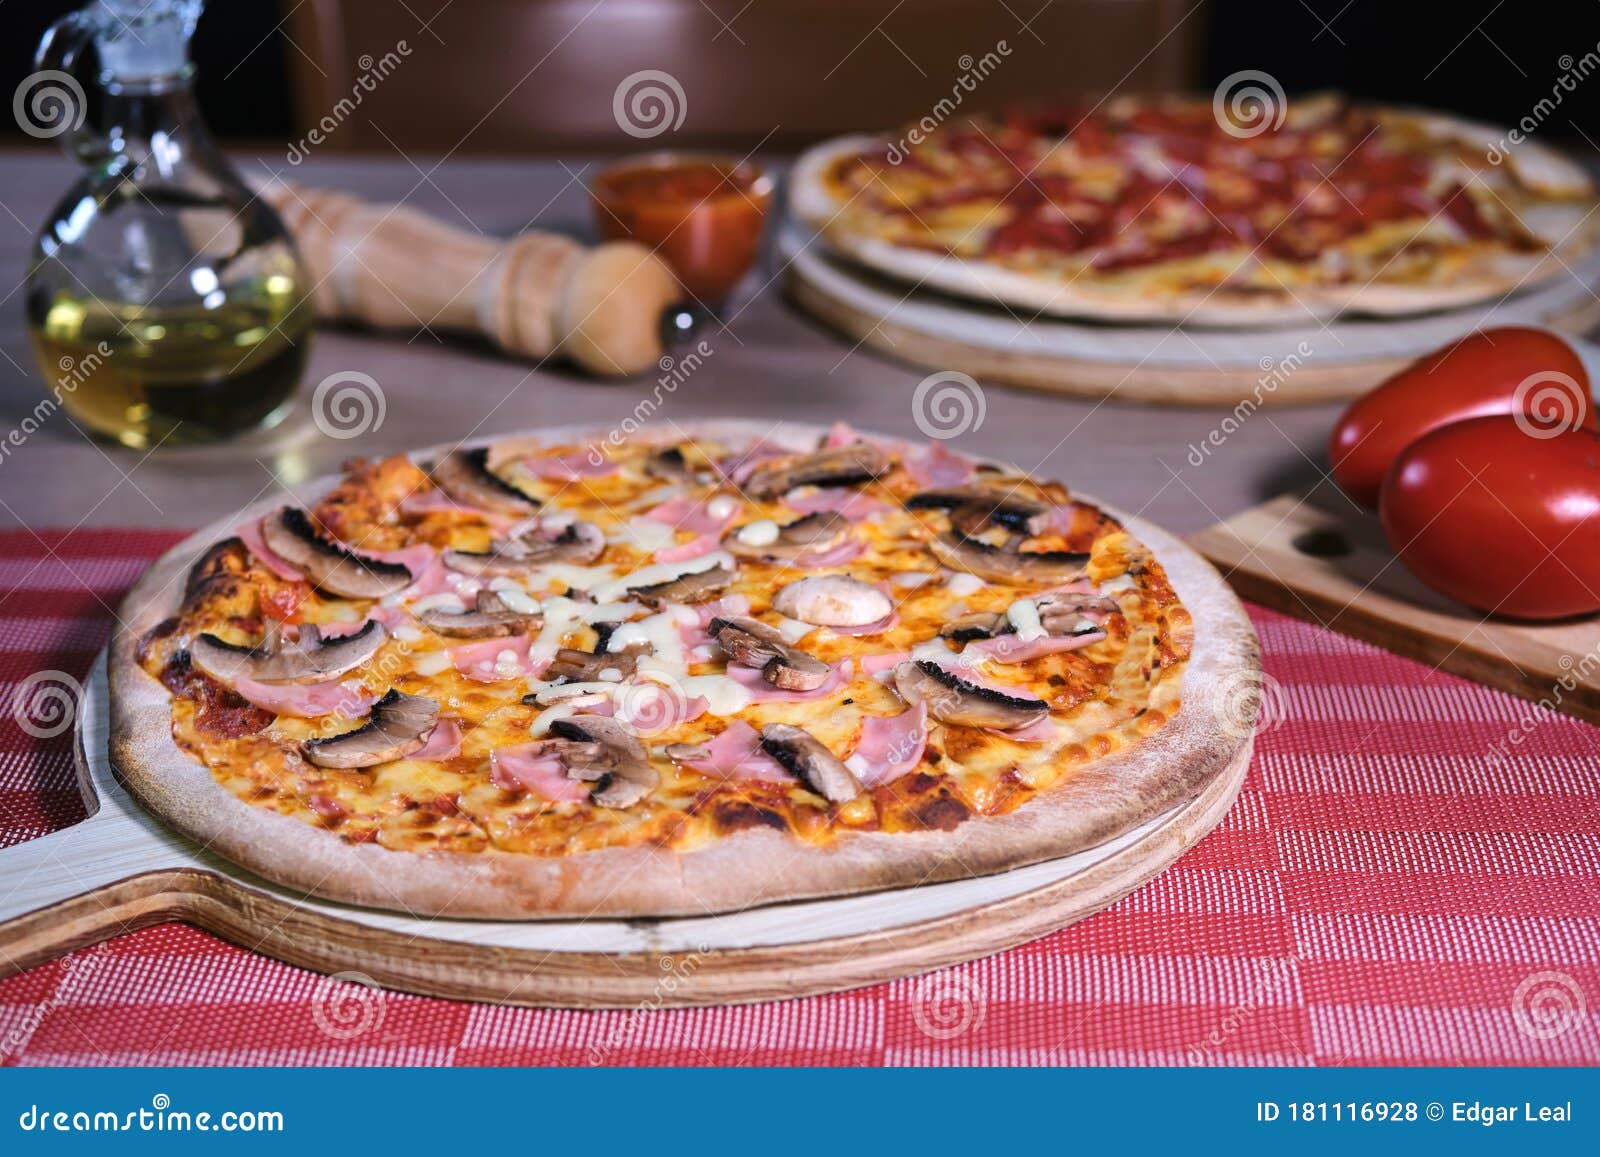 italian pizza tomato sauce with ham and mushrooms